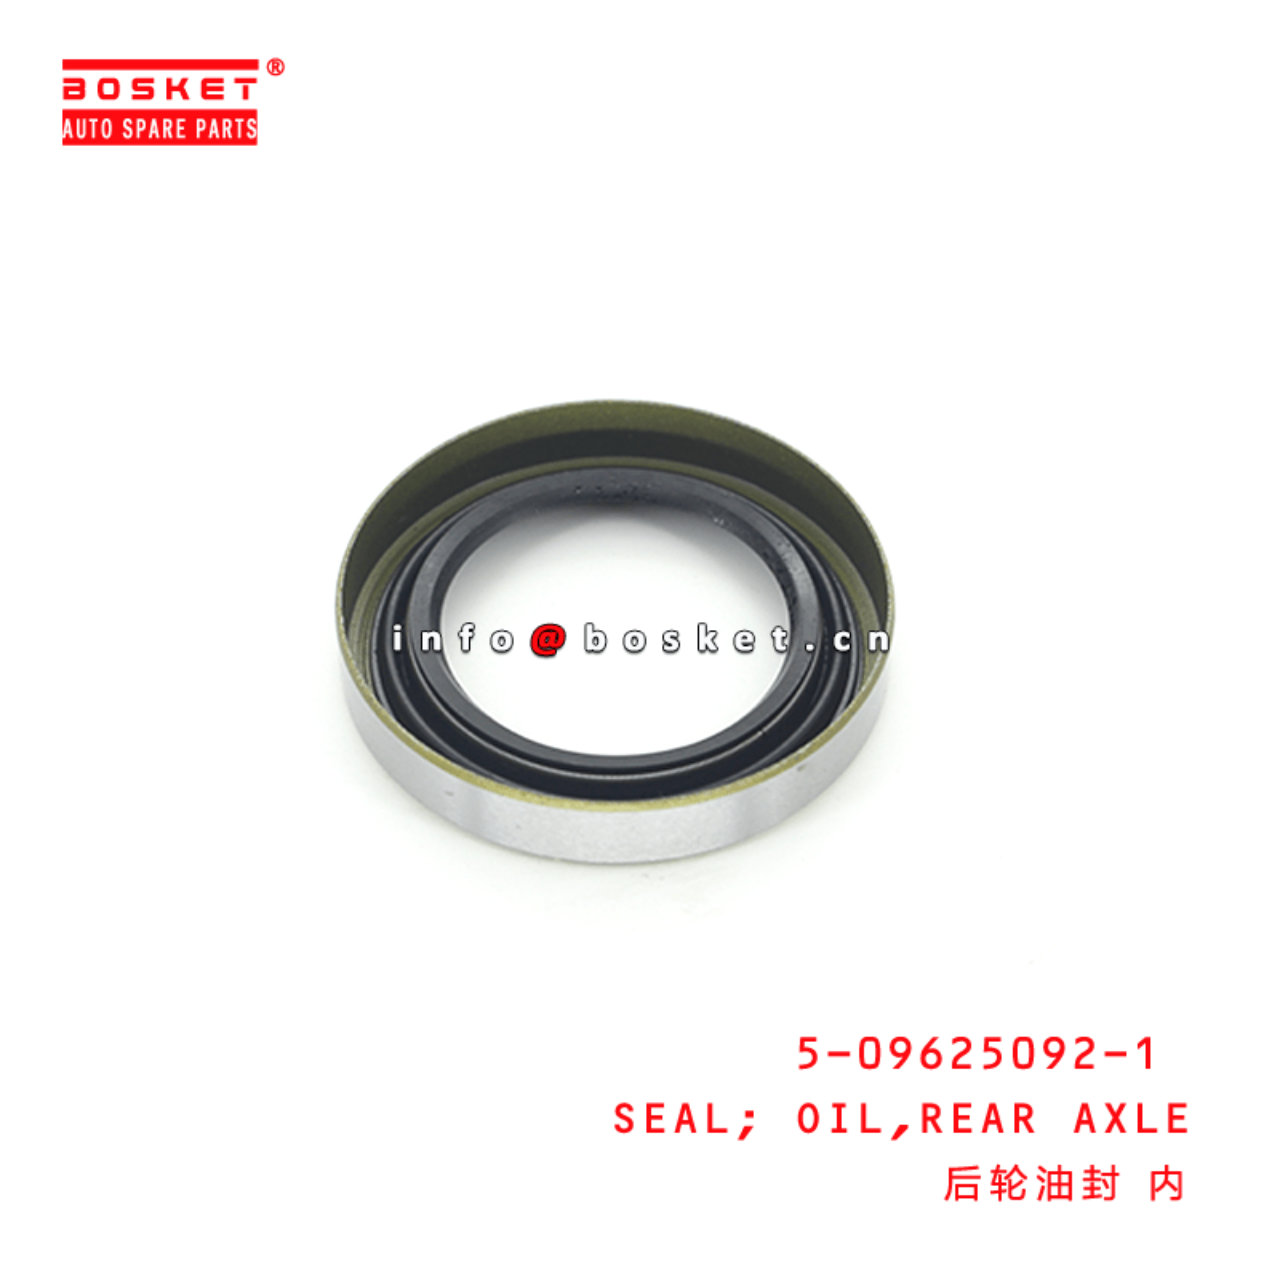 5-09625092-1 Rear Axle Oil Seal 5096250921 Suitable for ISUZU TFR17 4ZE1